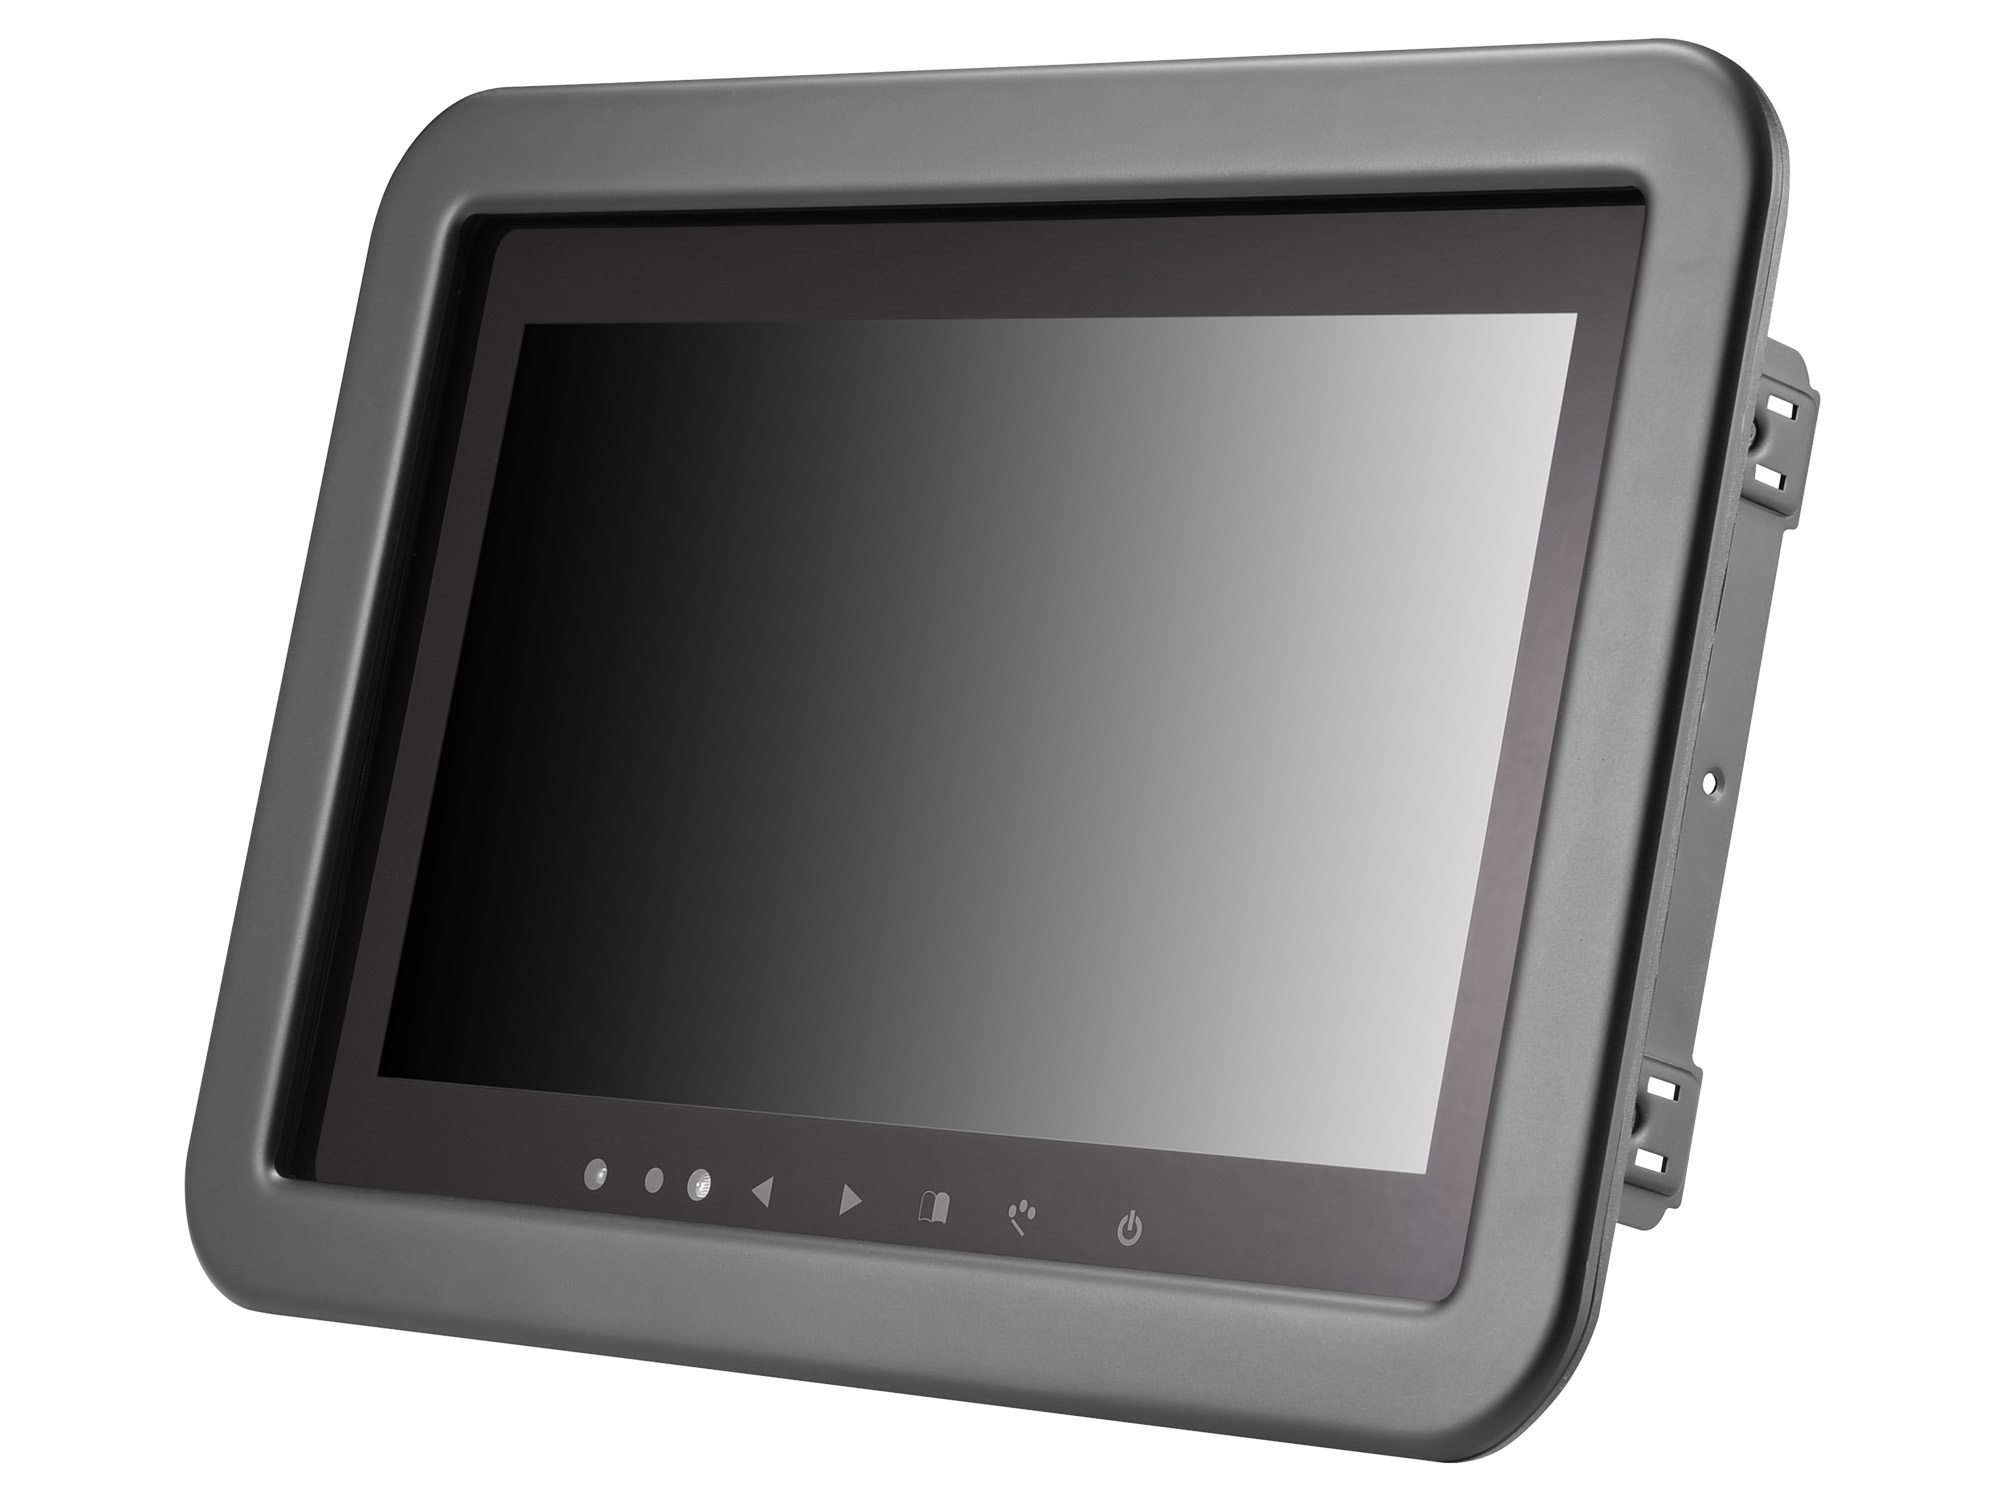 10.1" IP65 Sunlight Readable Capacitive Touchscreen LCD Industrial Display Monitor w/ HDMI, DVI, VGA & AV Inputs - https://www.xenarc.com/1029GNH.html